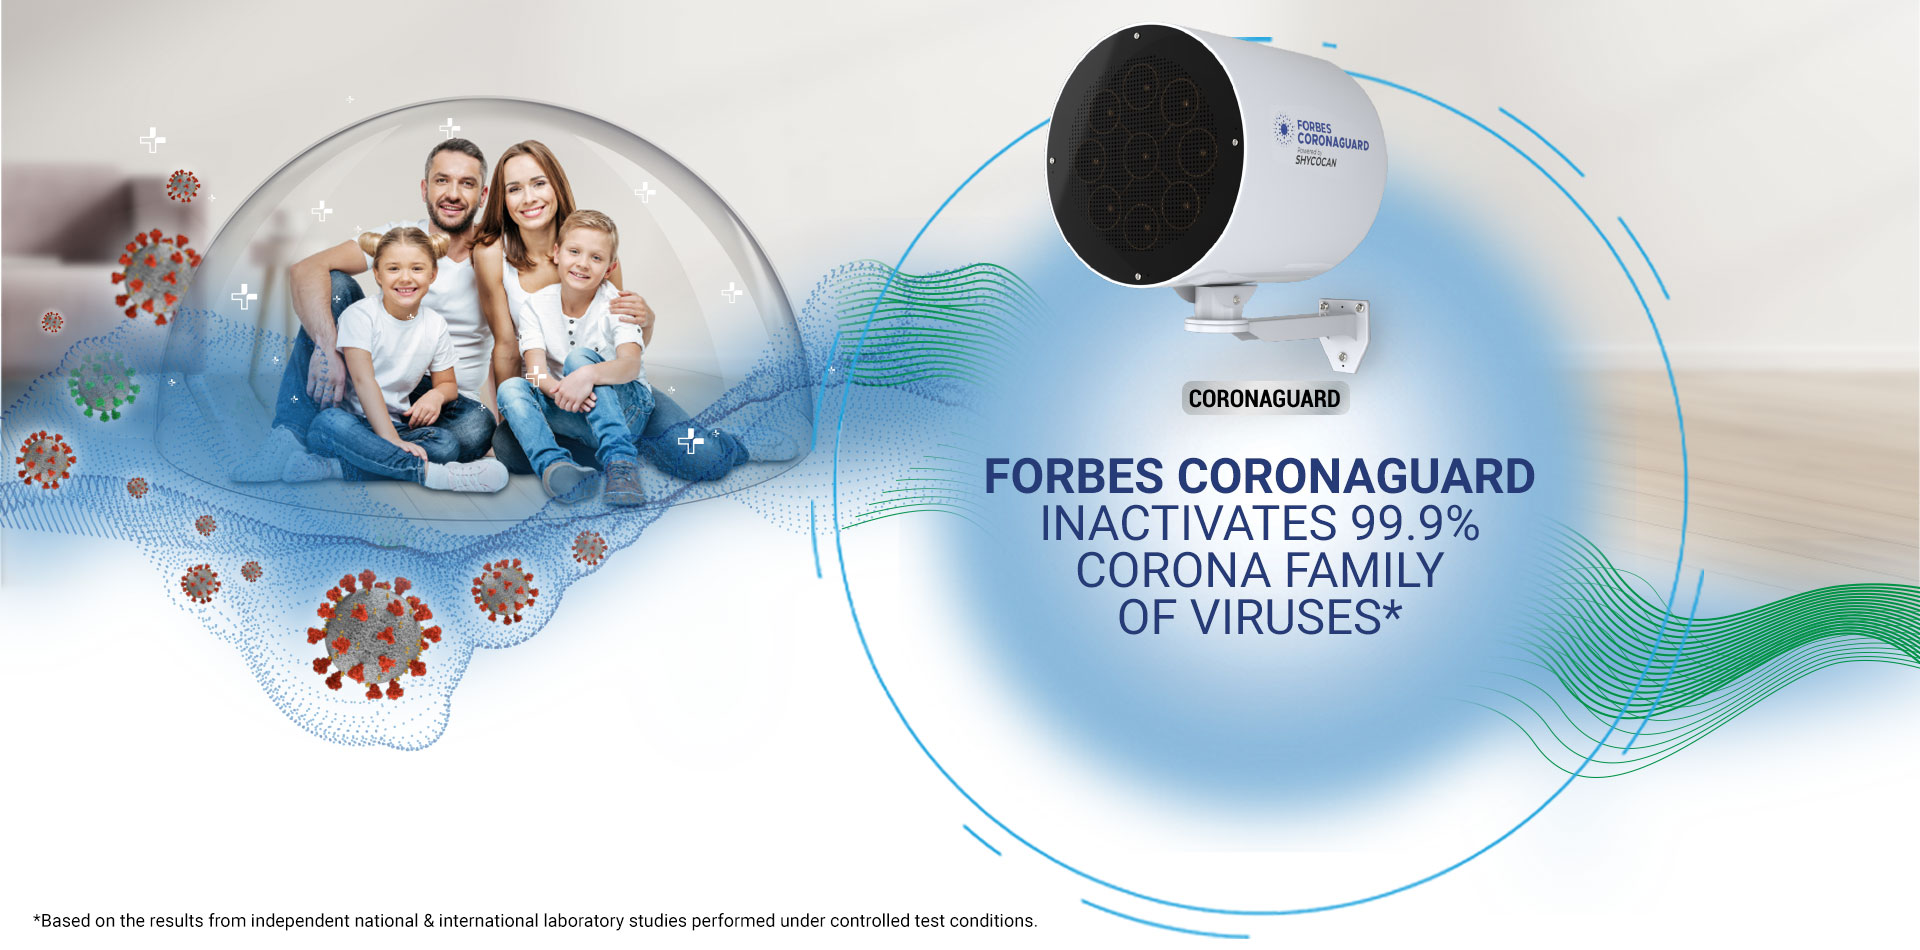 FORBES CORONAGUARD INACTIVATES 99.9% CORONA FAMILY OF VIRUSES*